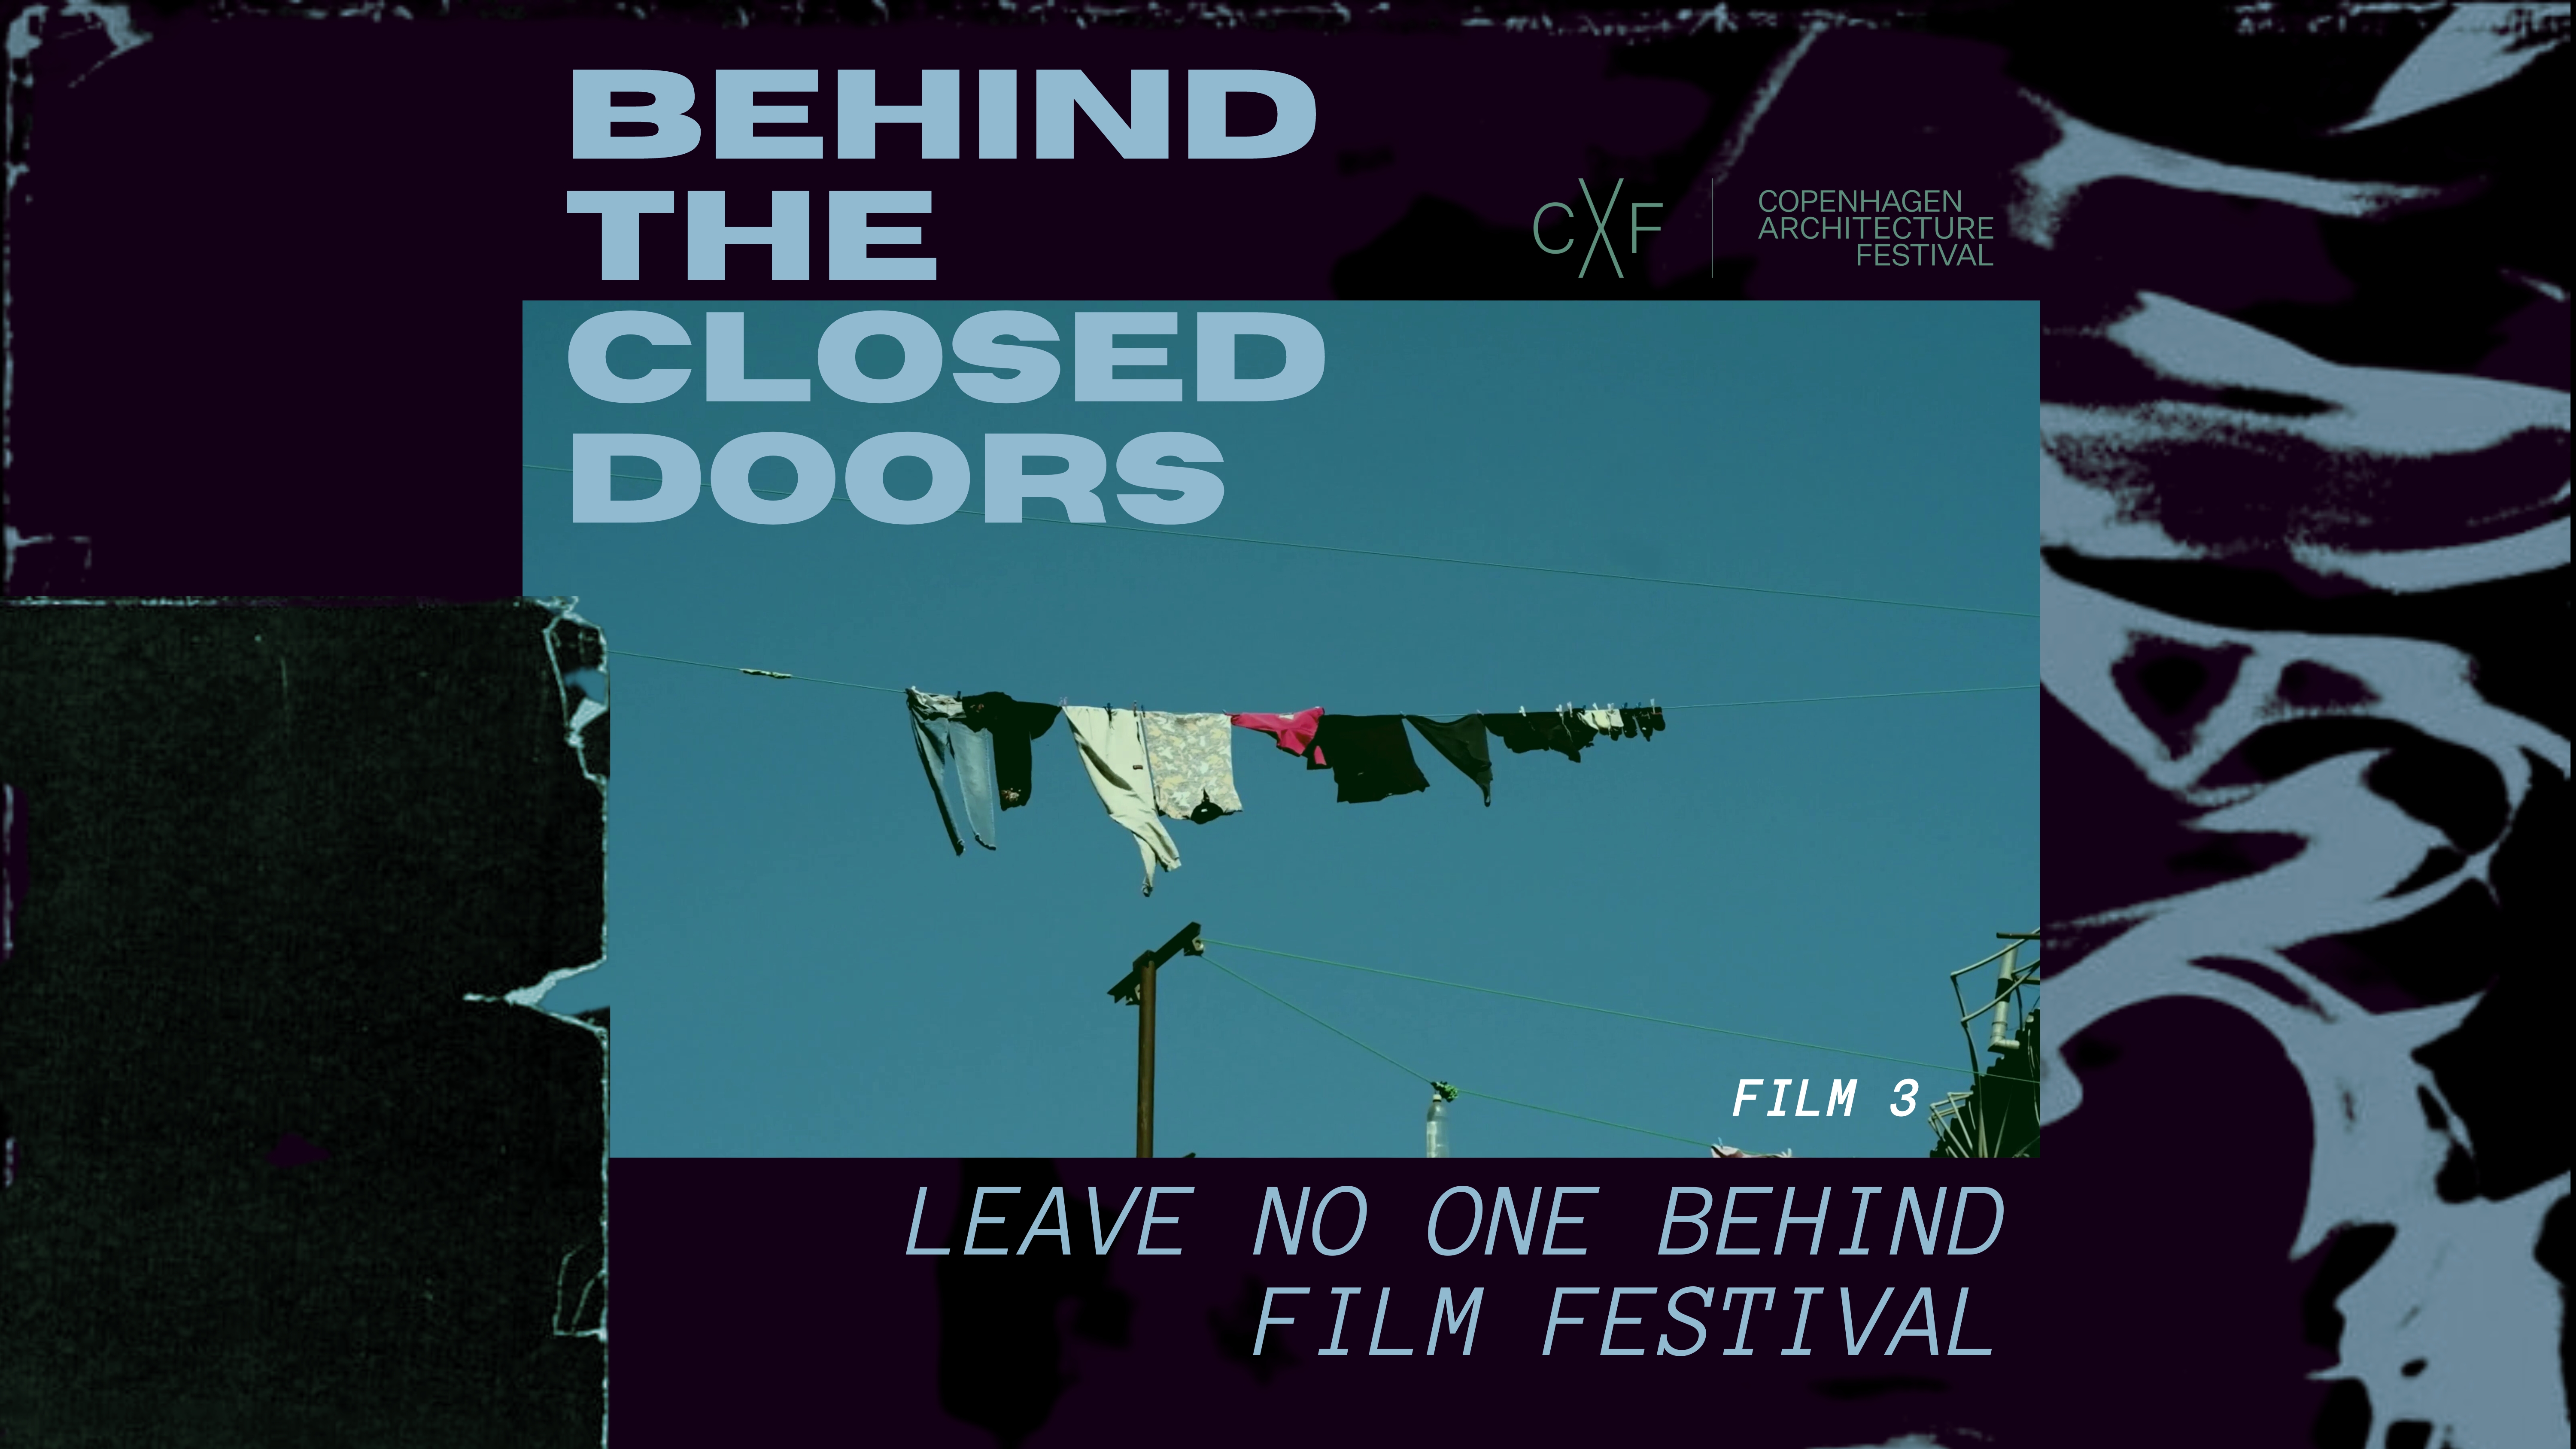 LNOB Film 3: “Behind the Closed Doors”